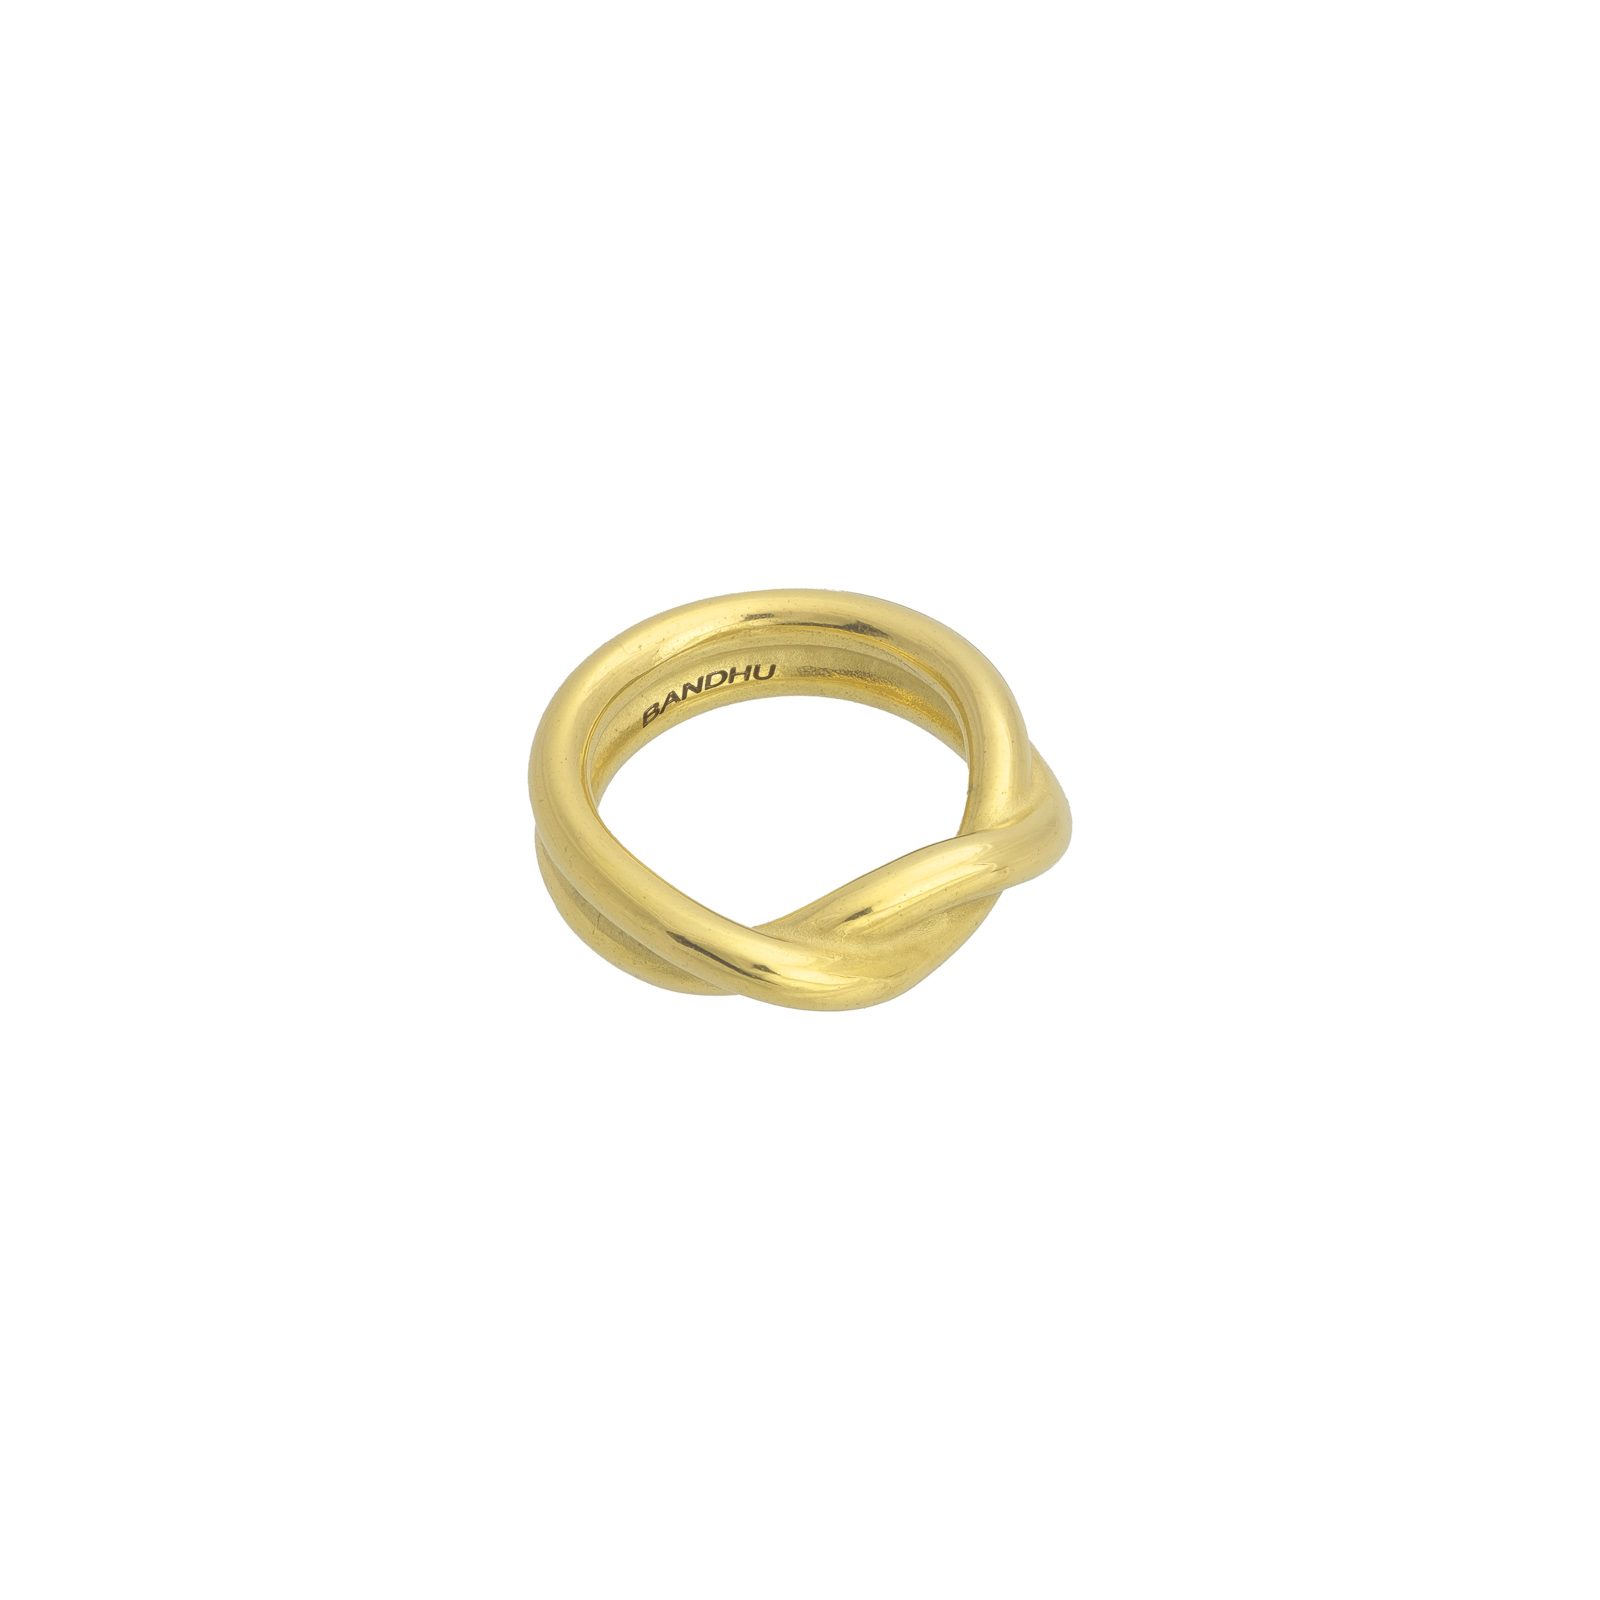 Twine ring gold plated - Bandhu